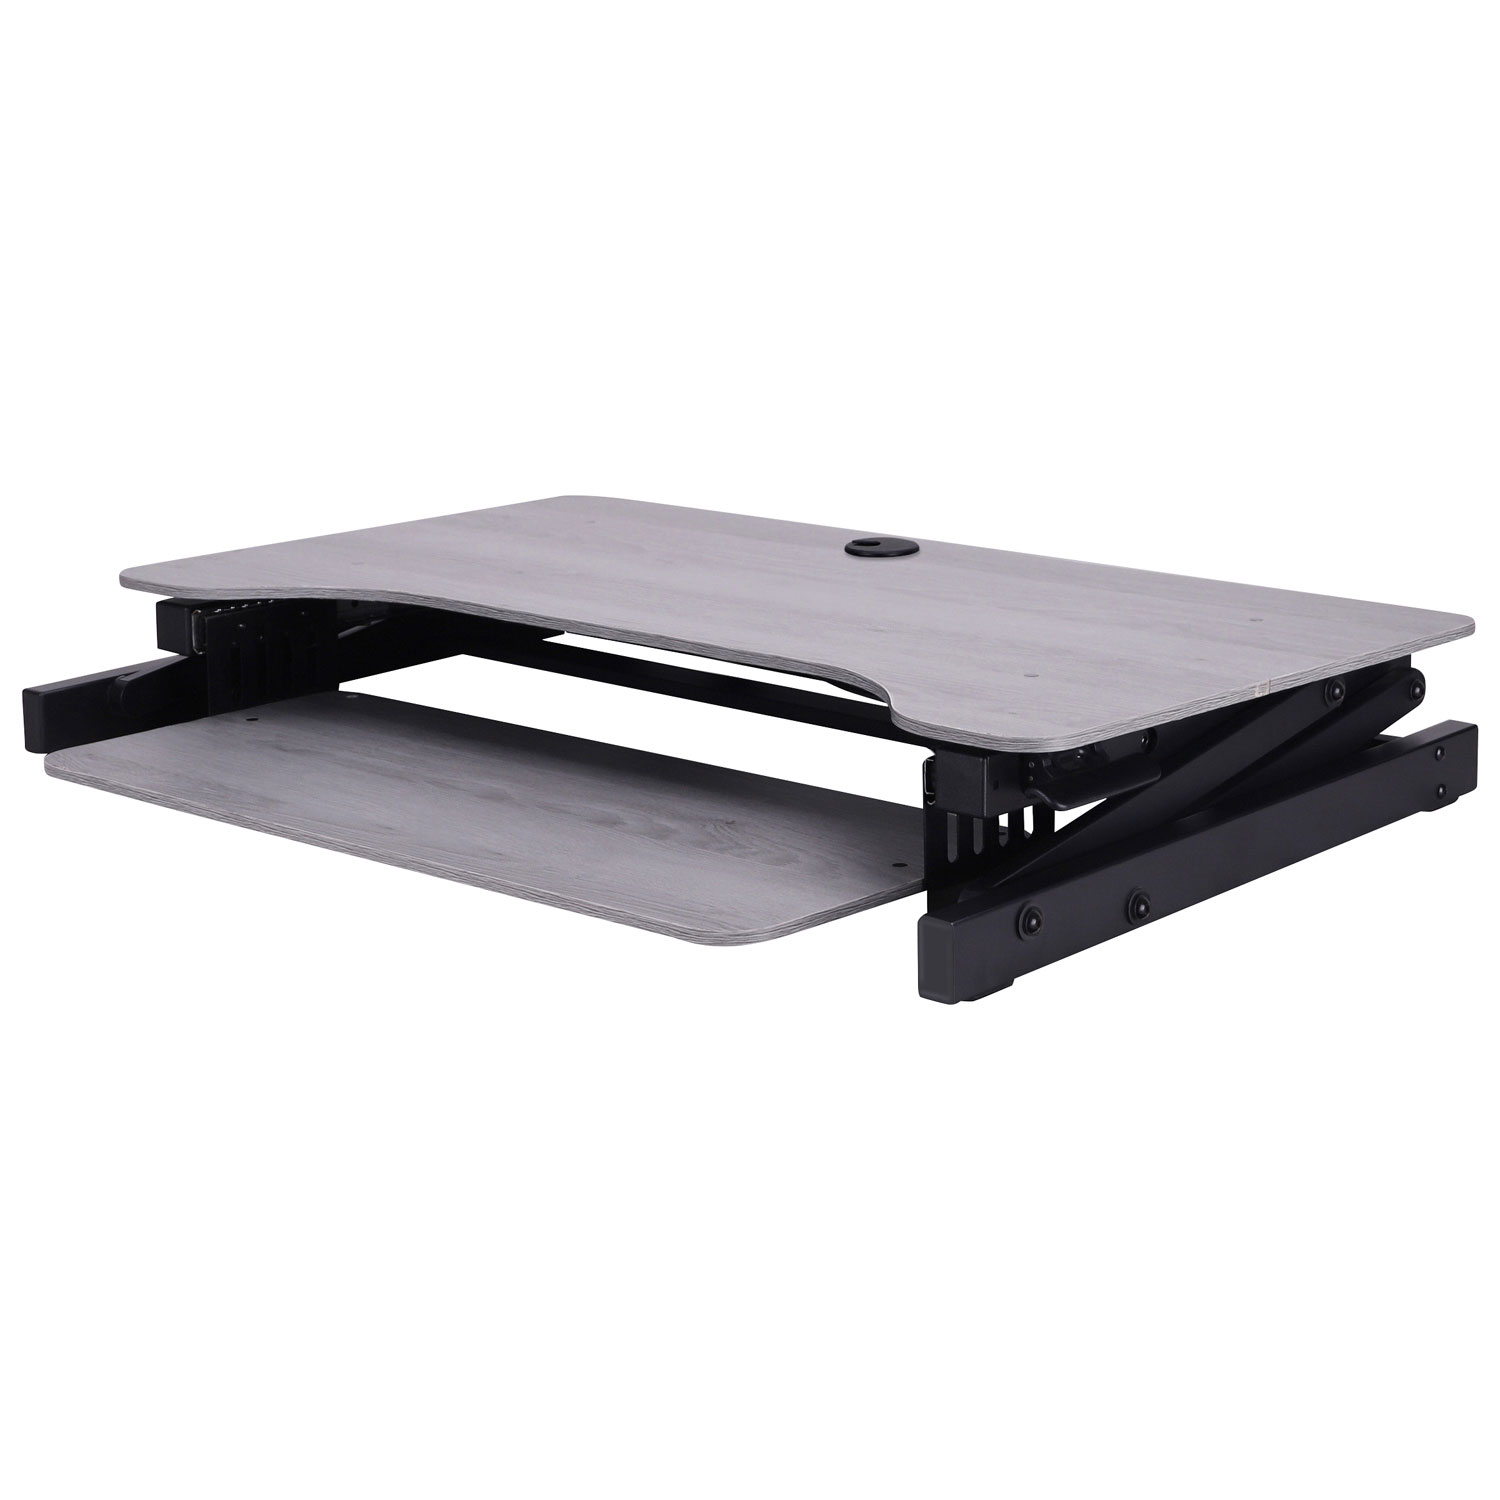 Rocelco DADR 38"W Ergonomic Adjustable Desk Riser with Keyboard Tray - Grey